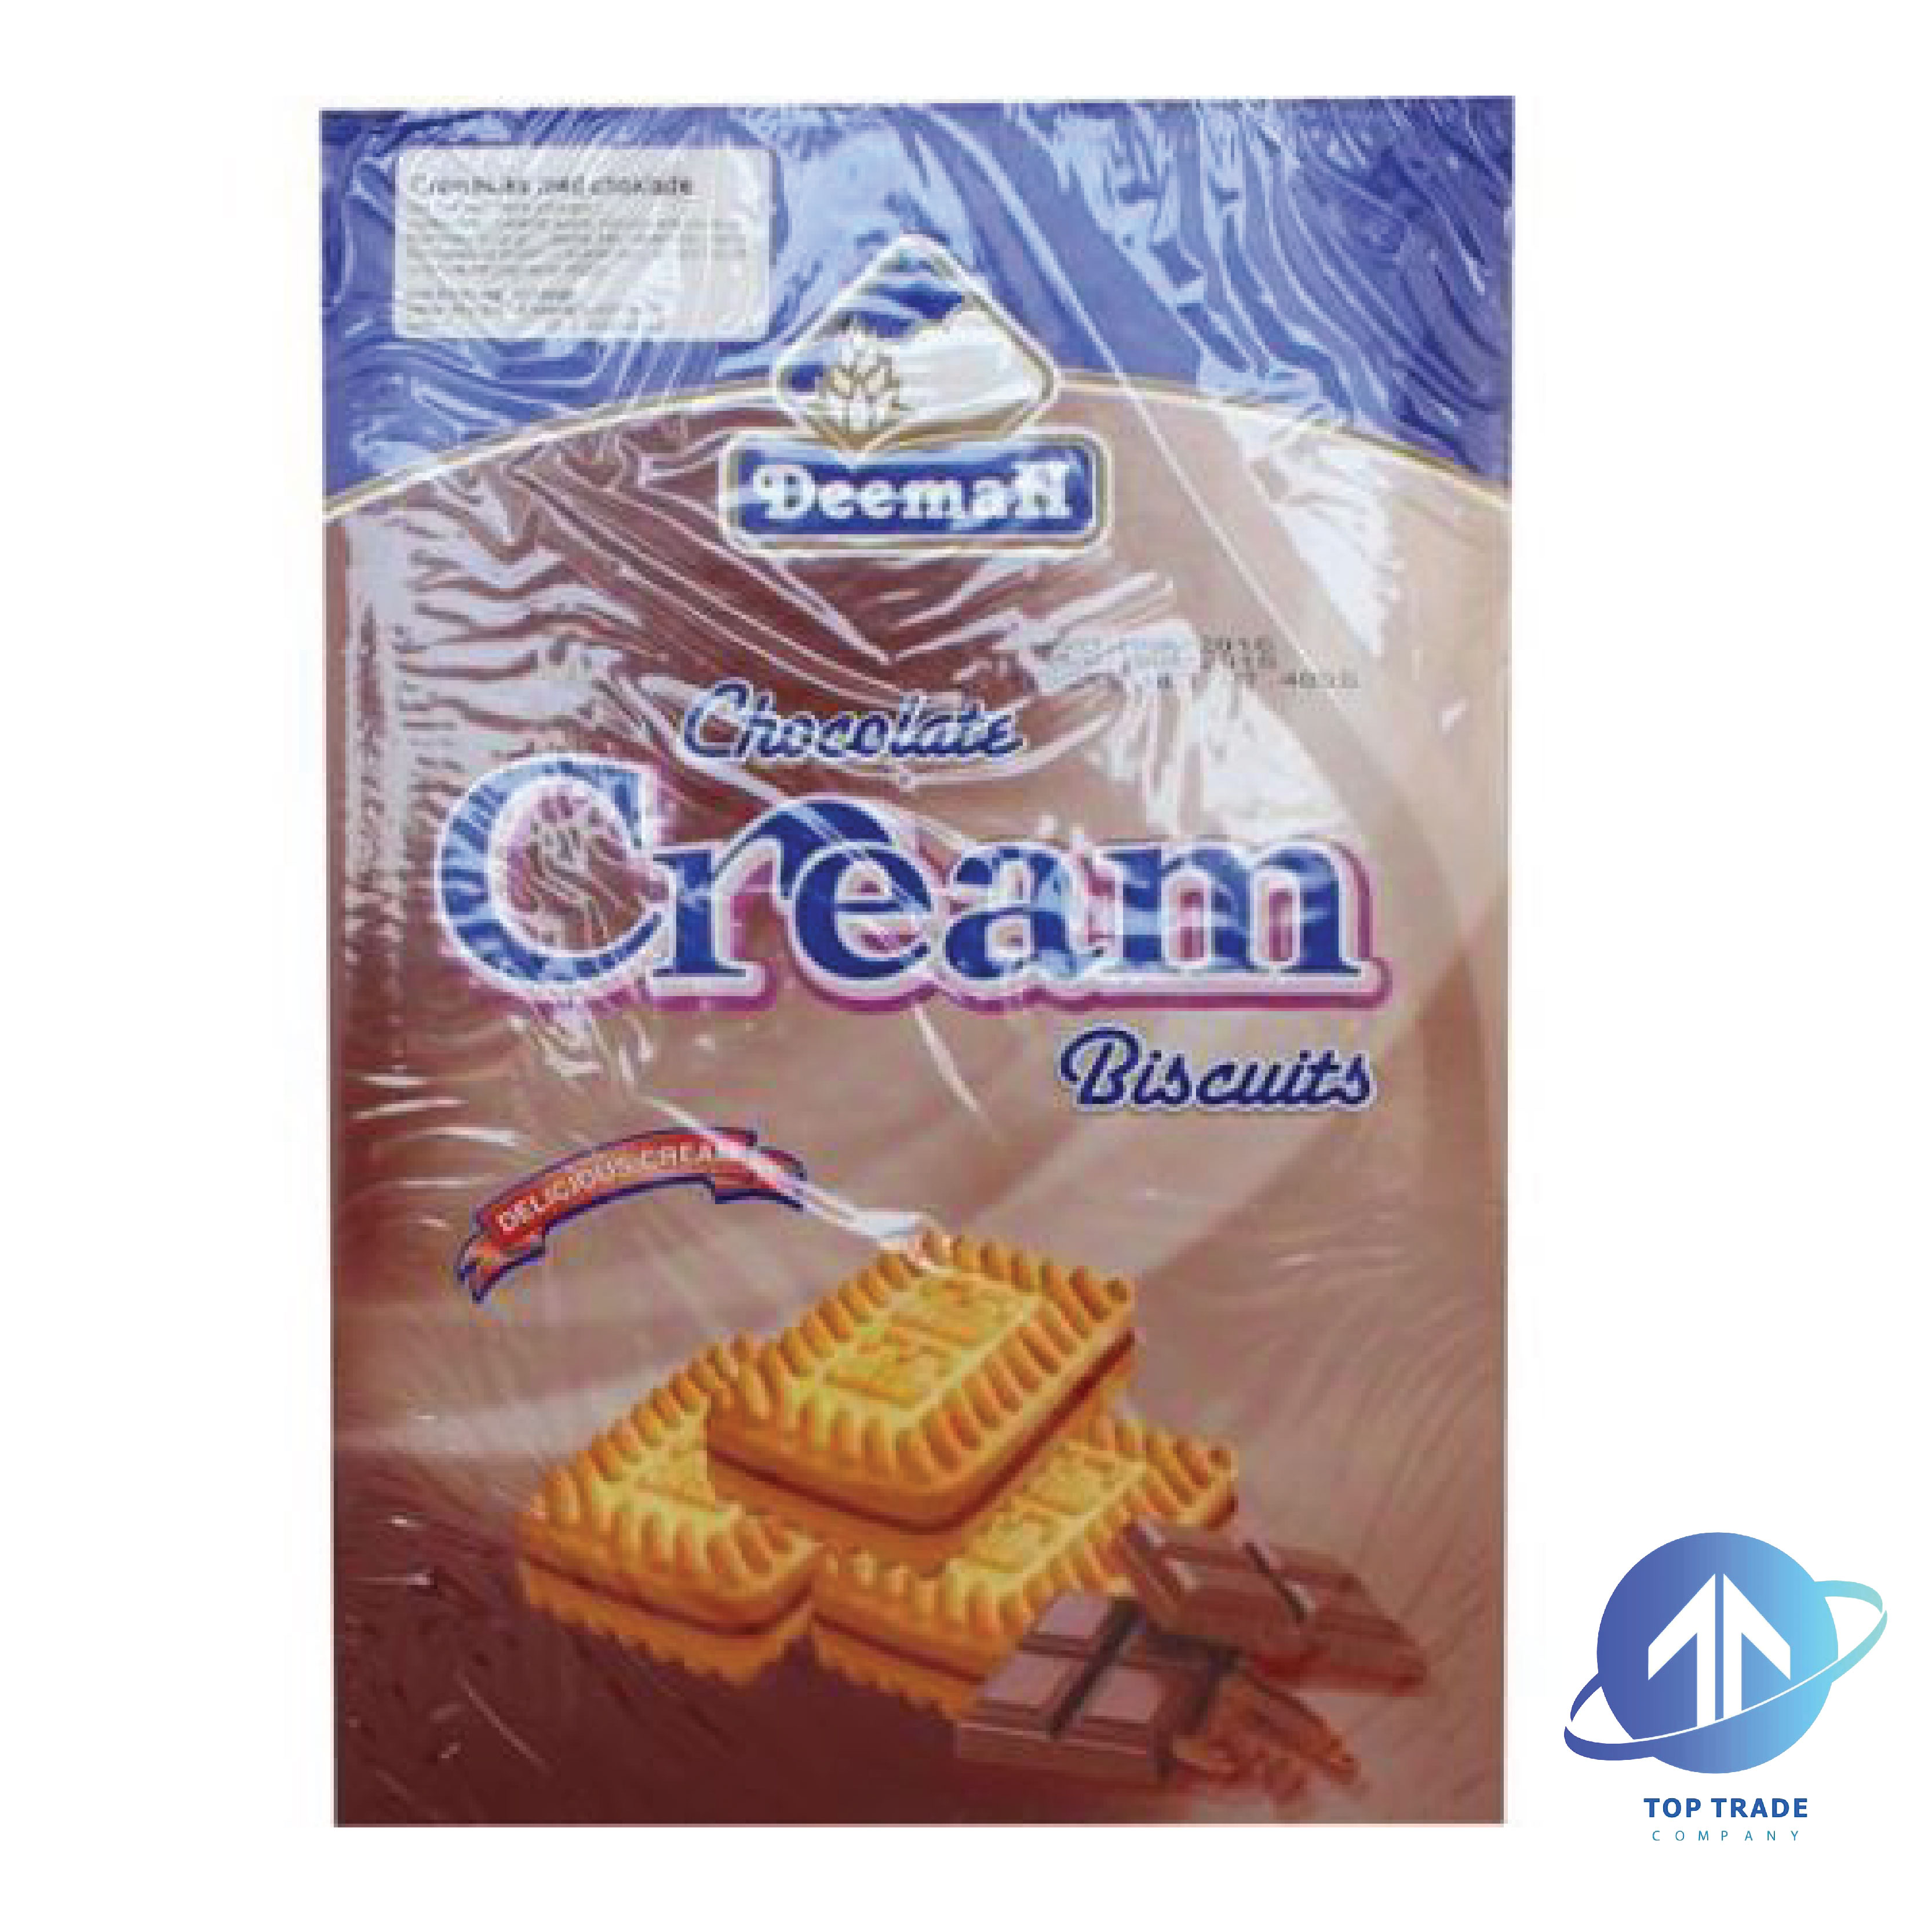 Deemah Chocolate Cream Biscuits 460gr